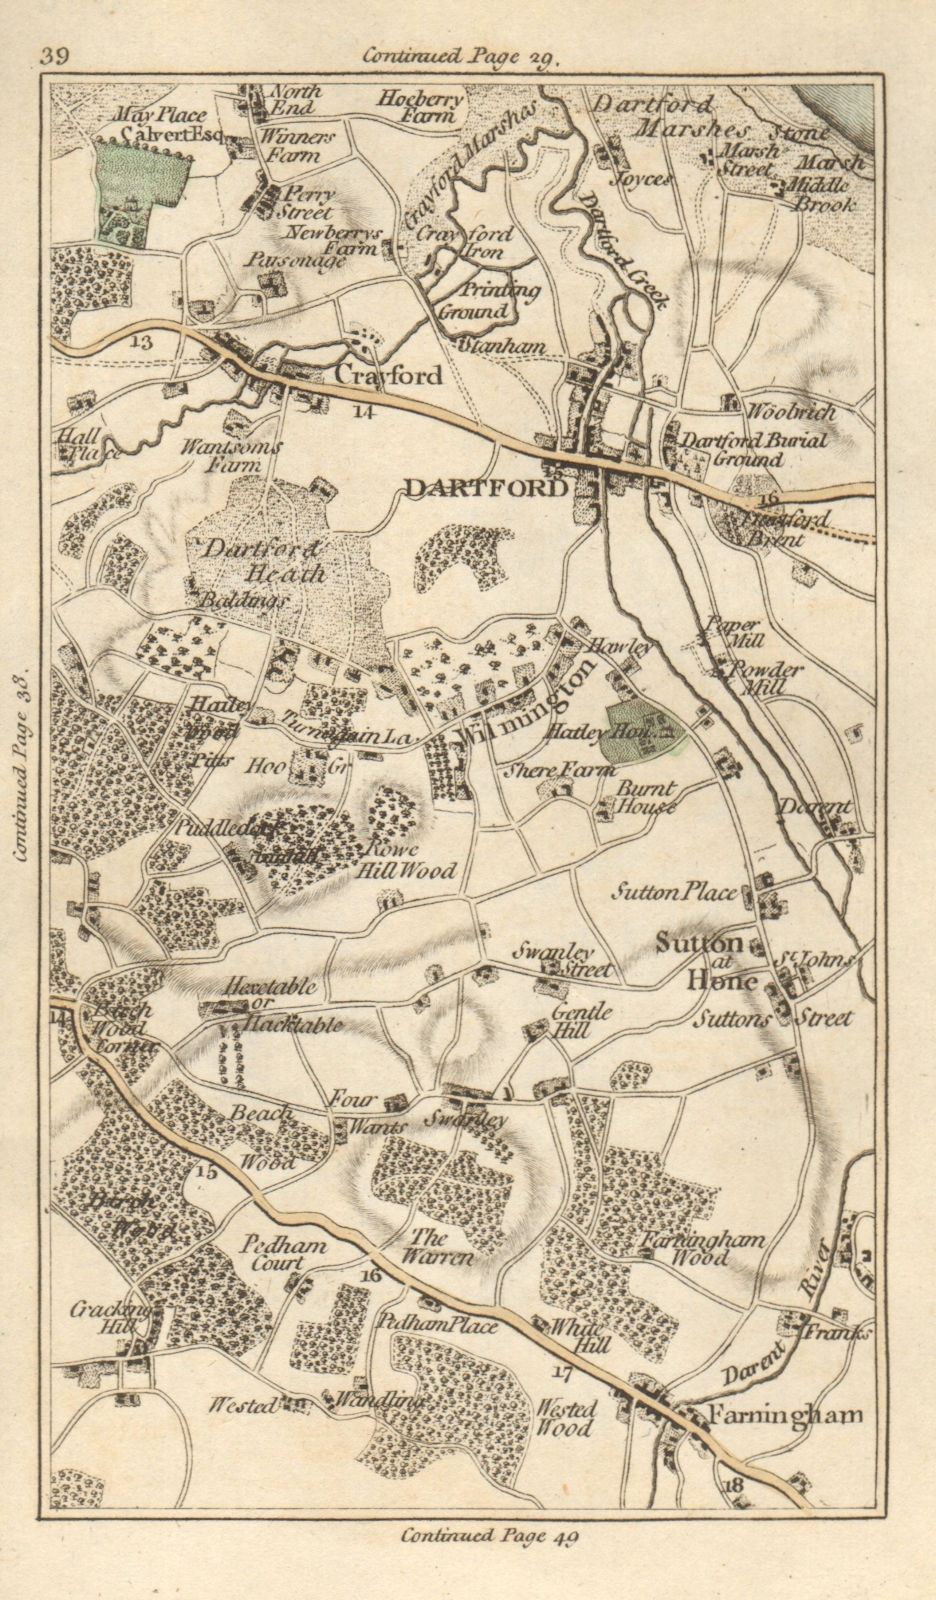 DARTFORD Crayford Bexley Sutton at Hone Farningham Wilmington Swanley 1786 map